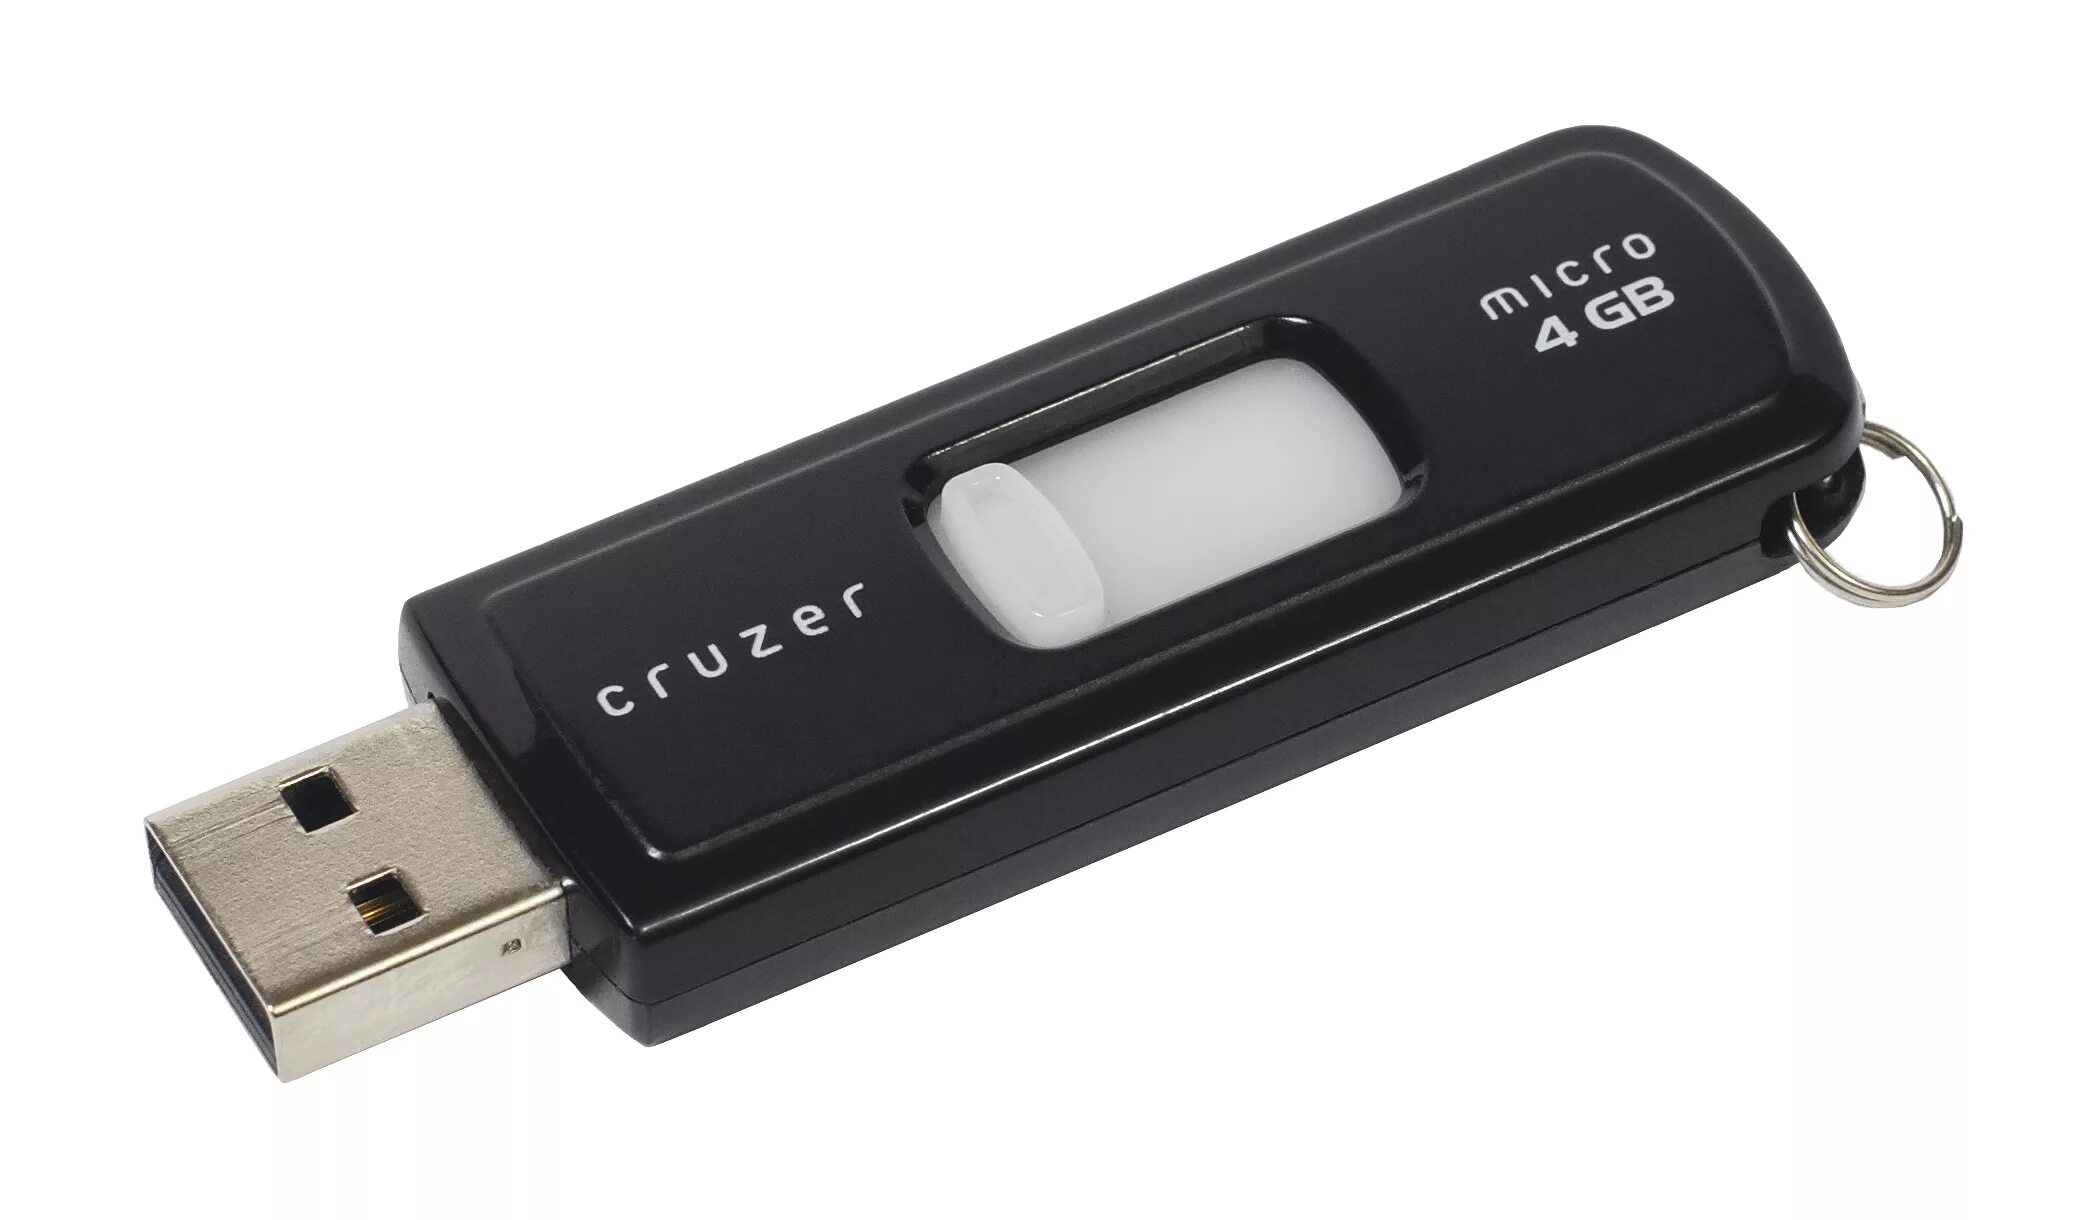 Capt usb device. Флешка SANDISK 4gb. Флешка 16гб USB тайп. SANDISK Cruzer Micro 4gb. USB Flash накопитель 4 GB.